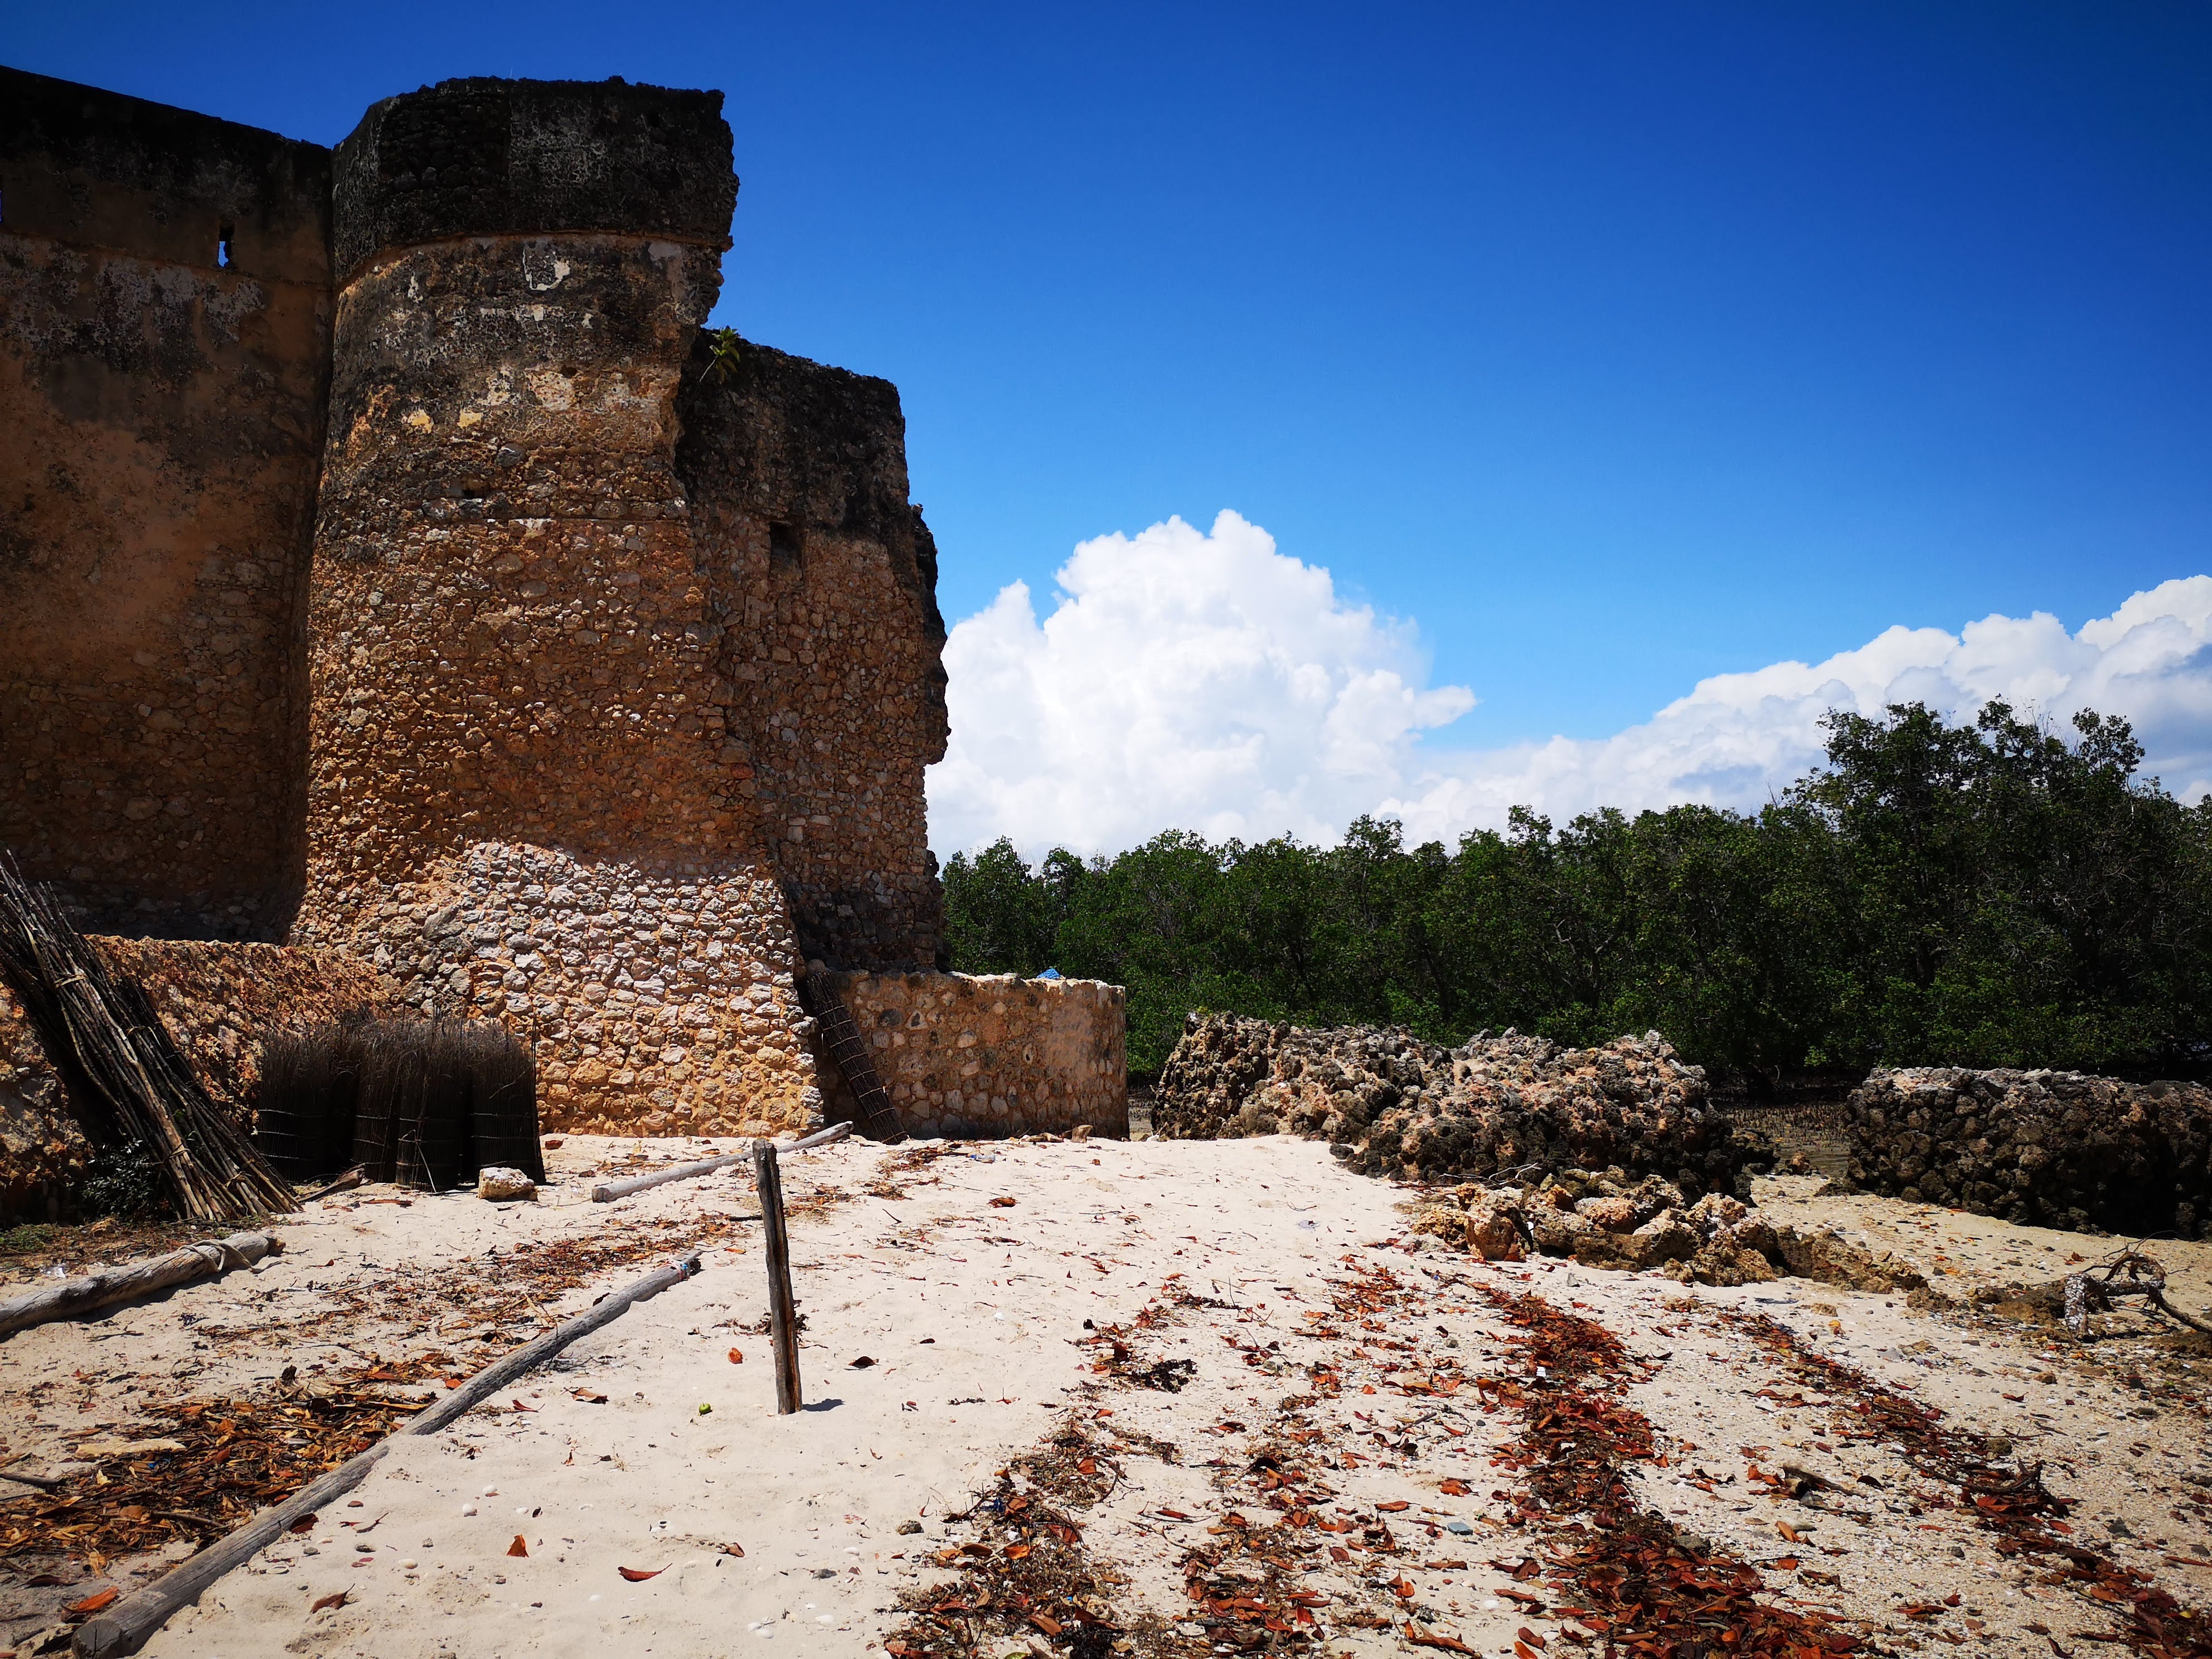 The images shows the ruins of Kilwa Kisiwani